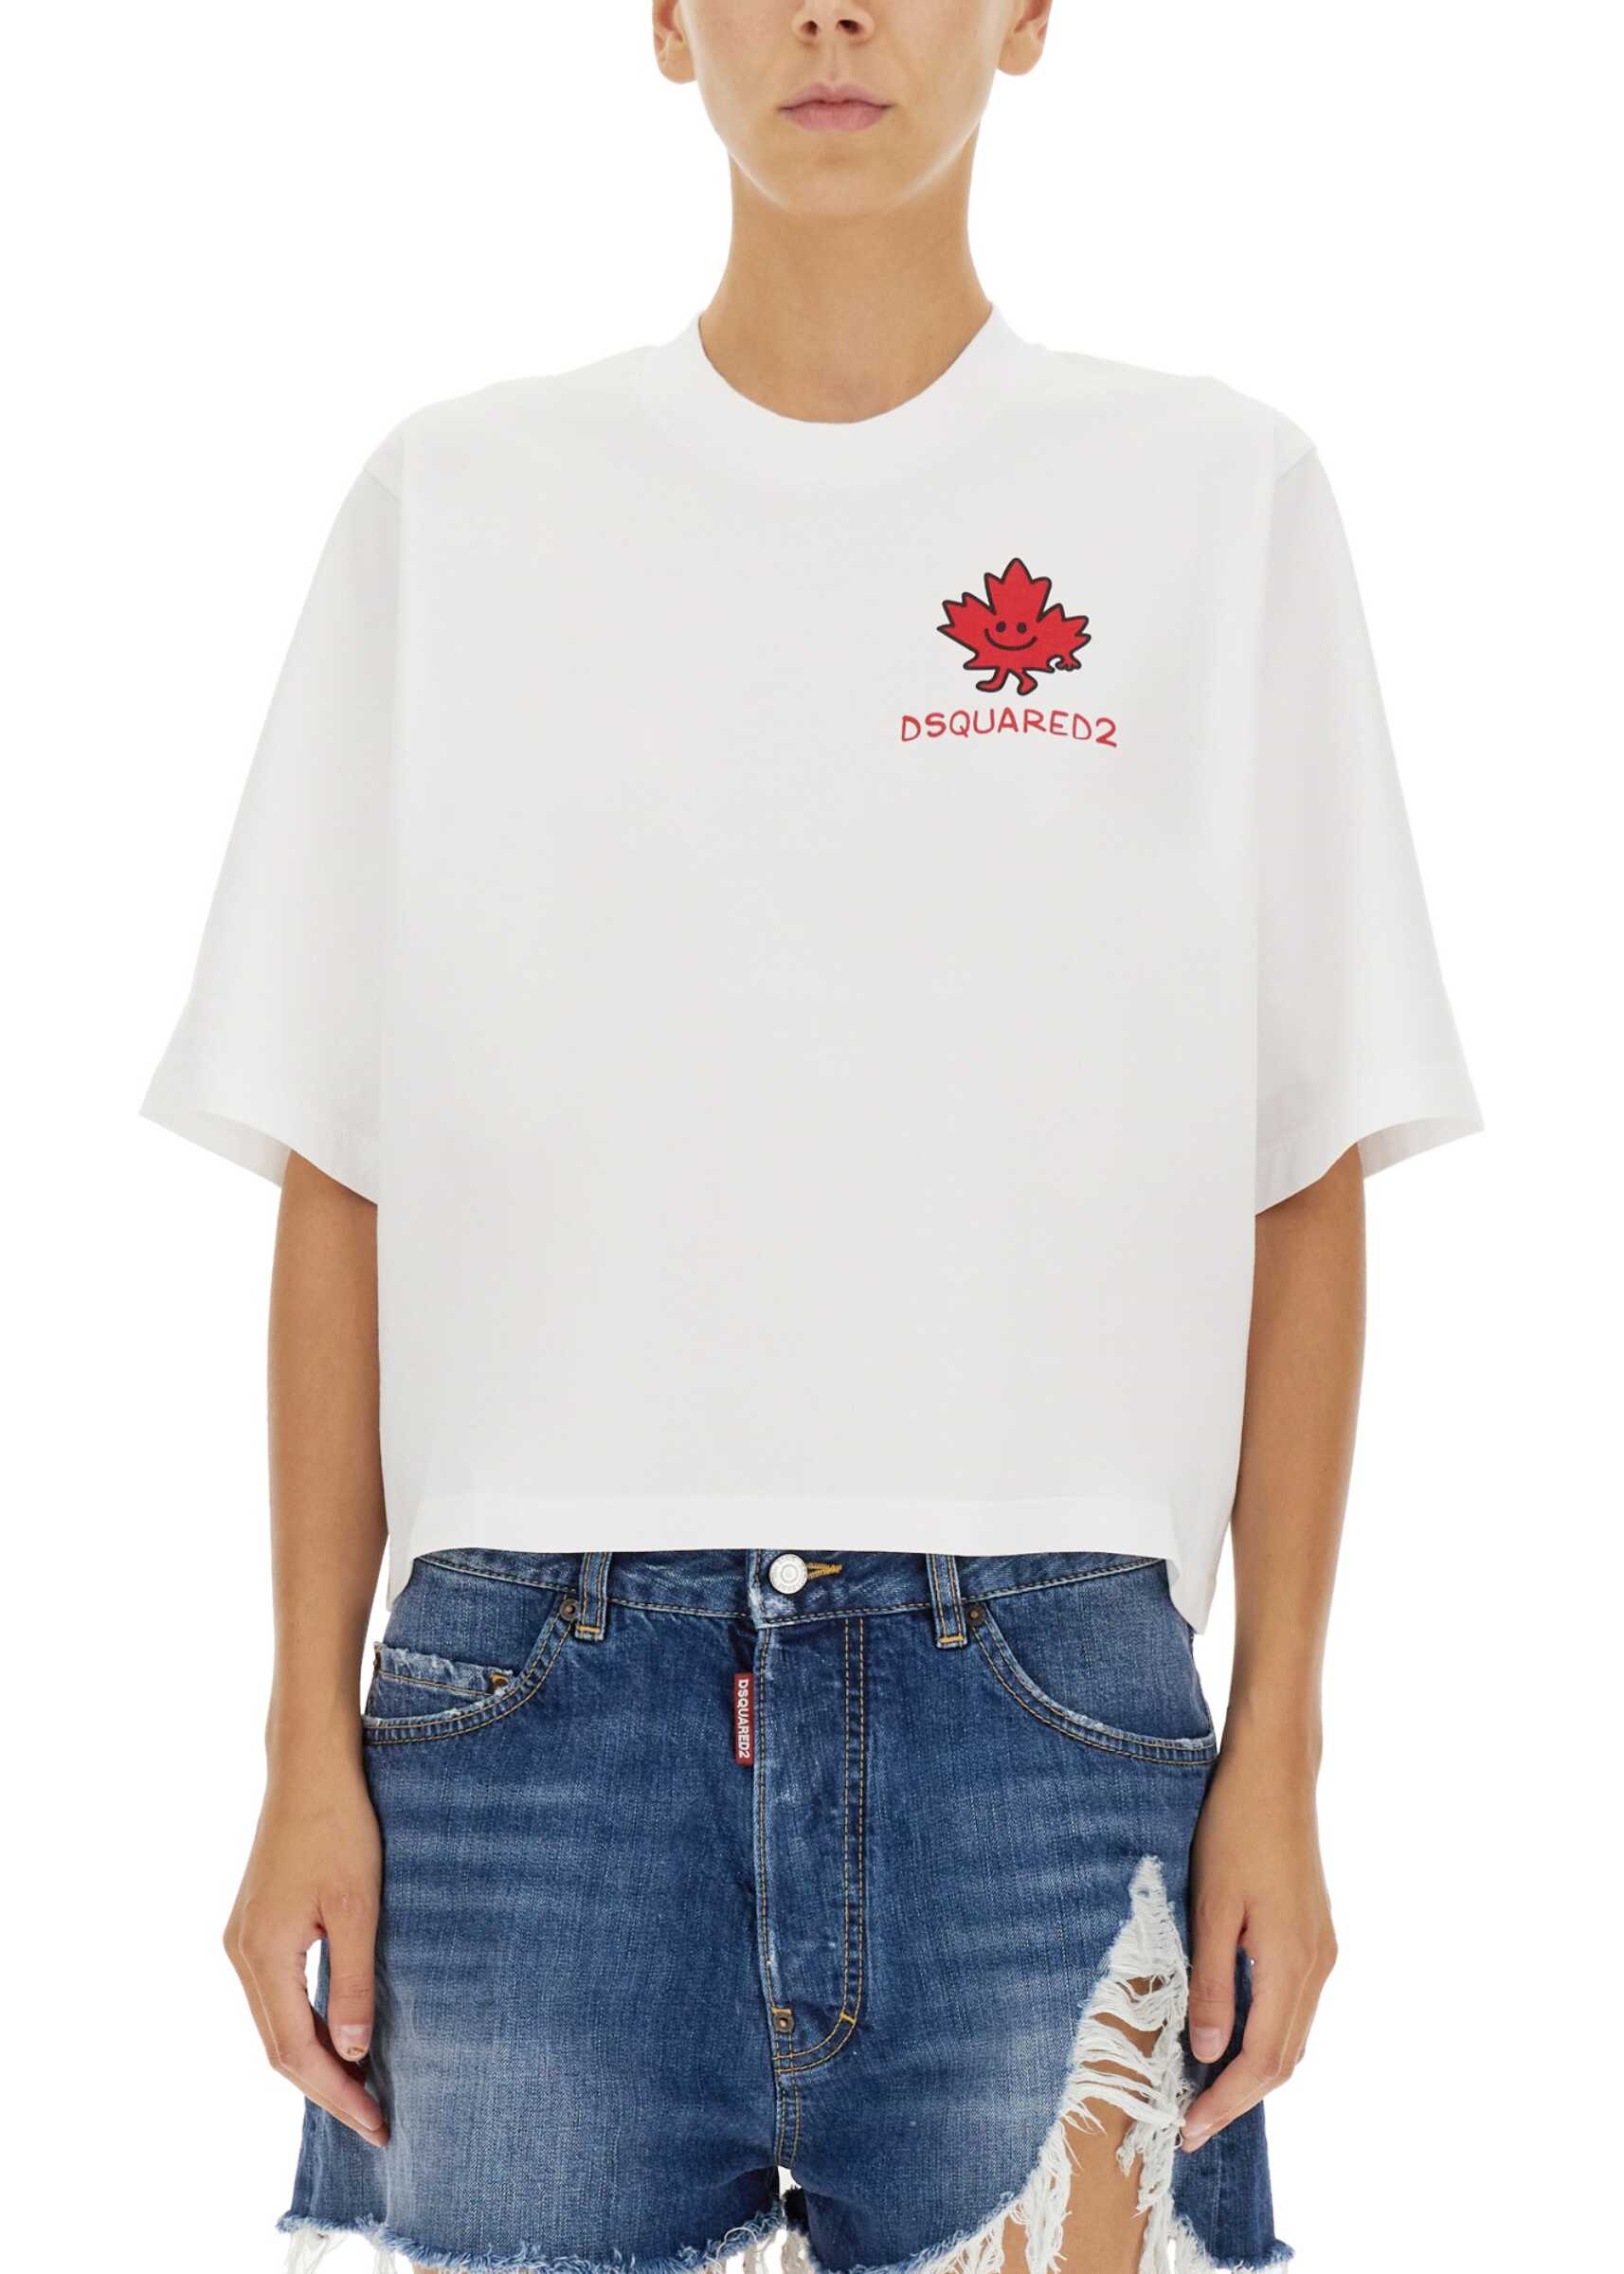 DSQUARED2 "Smiling Maple" T-Shirt WHITE